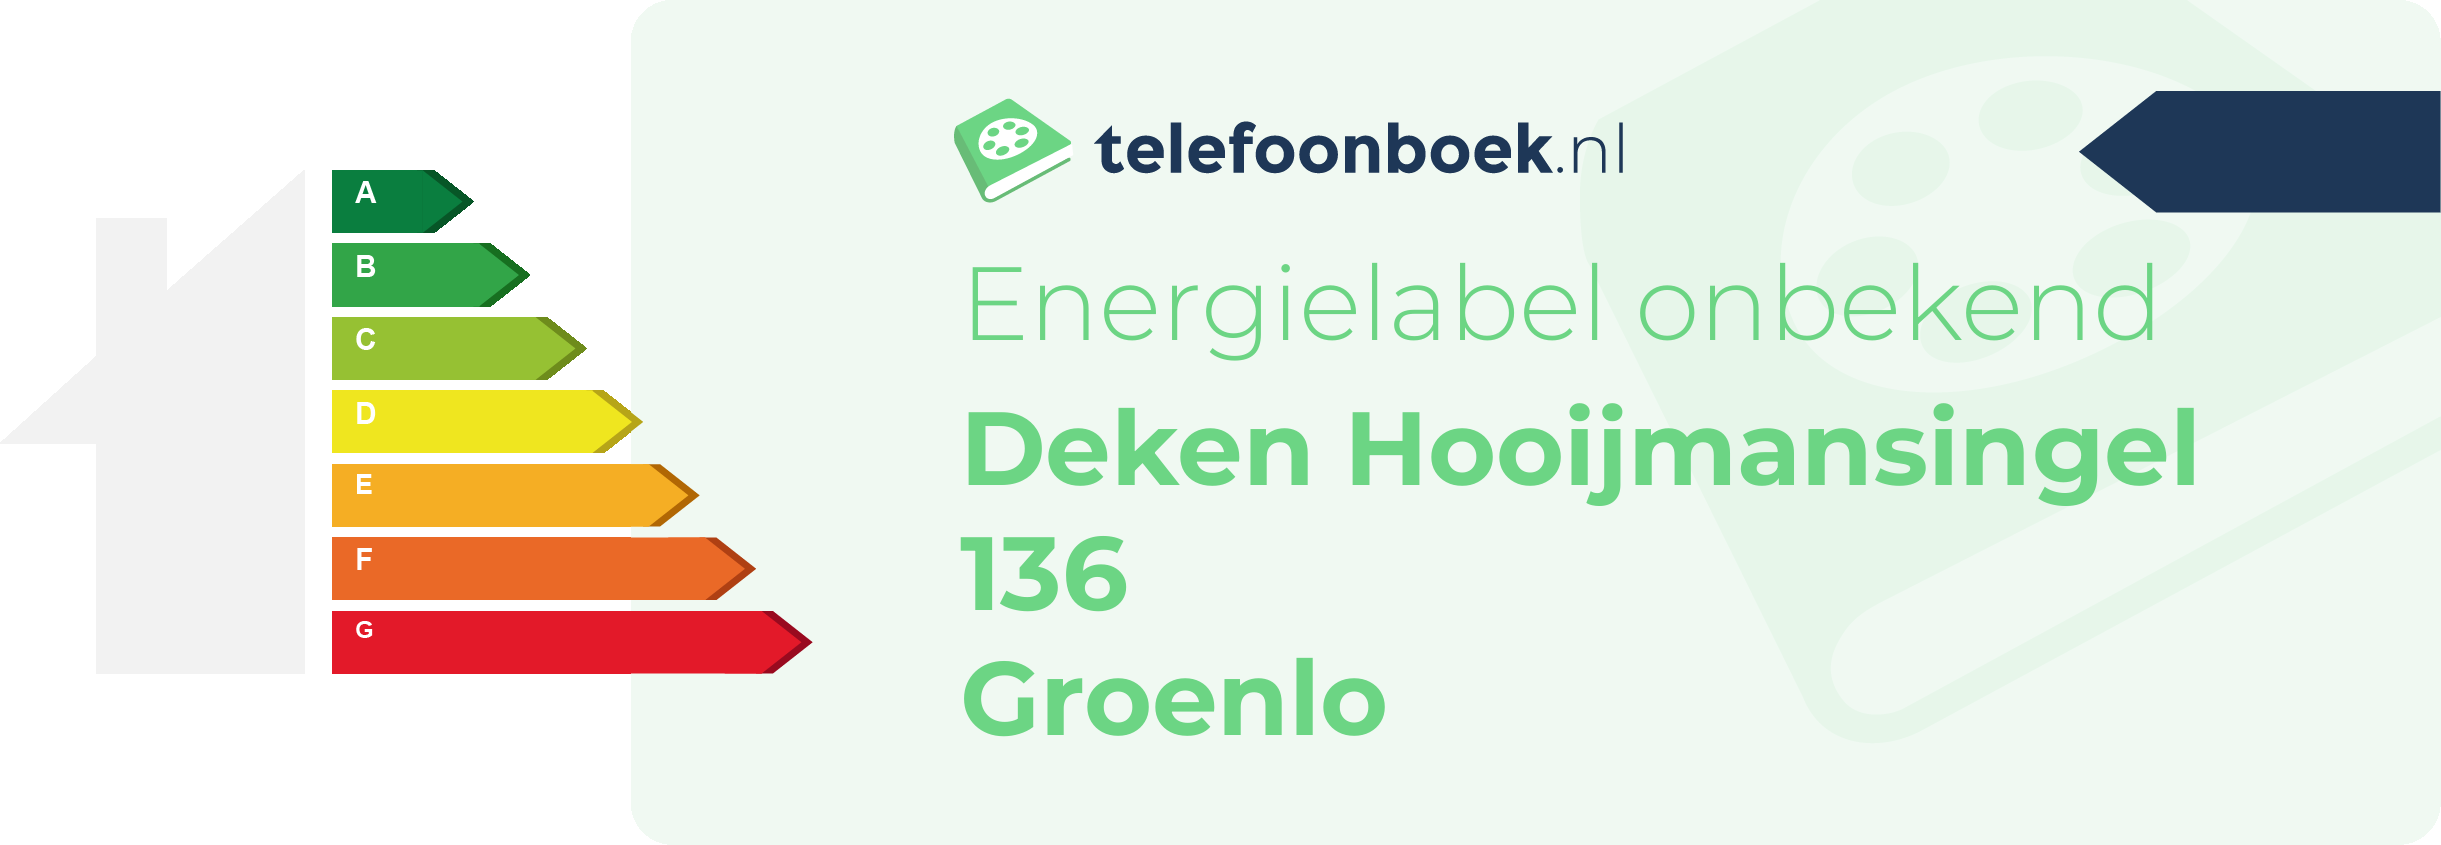 Energielabel Deken Hooijmansingel 136 Groenlo